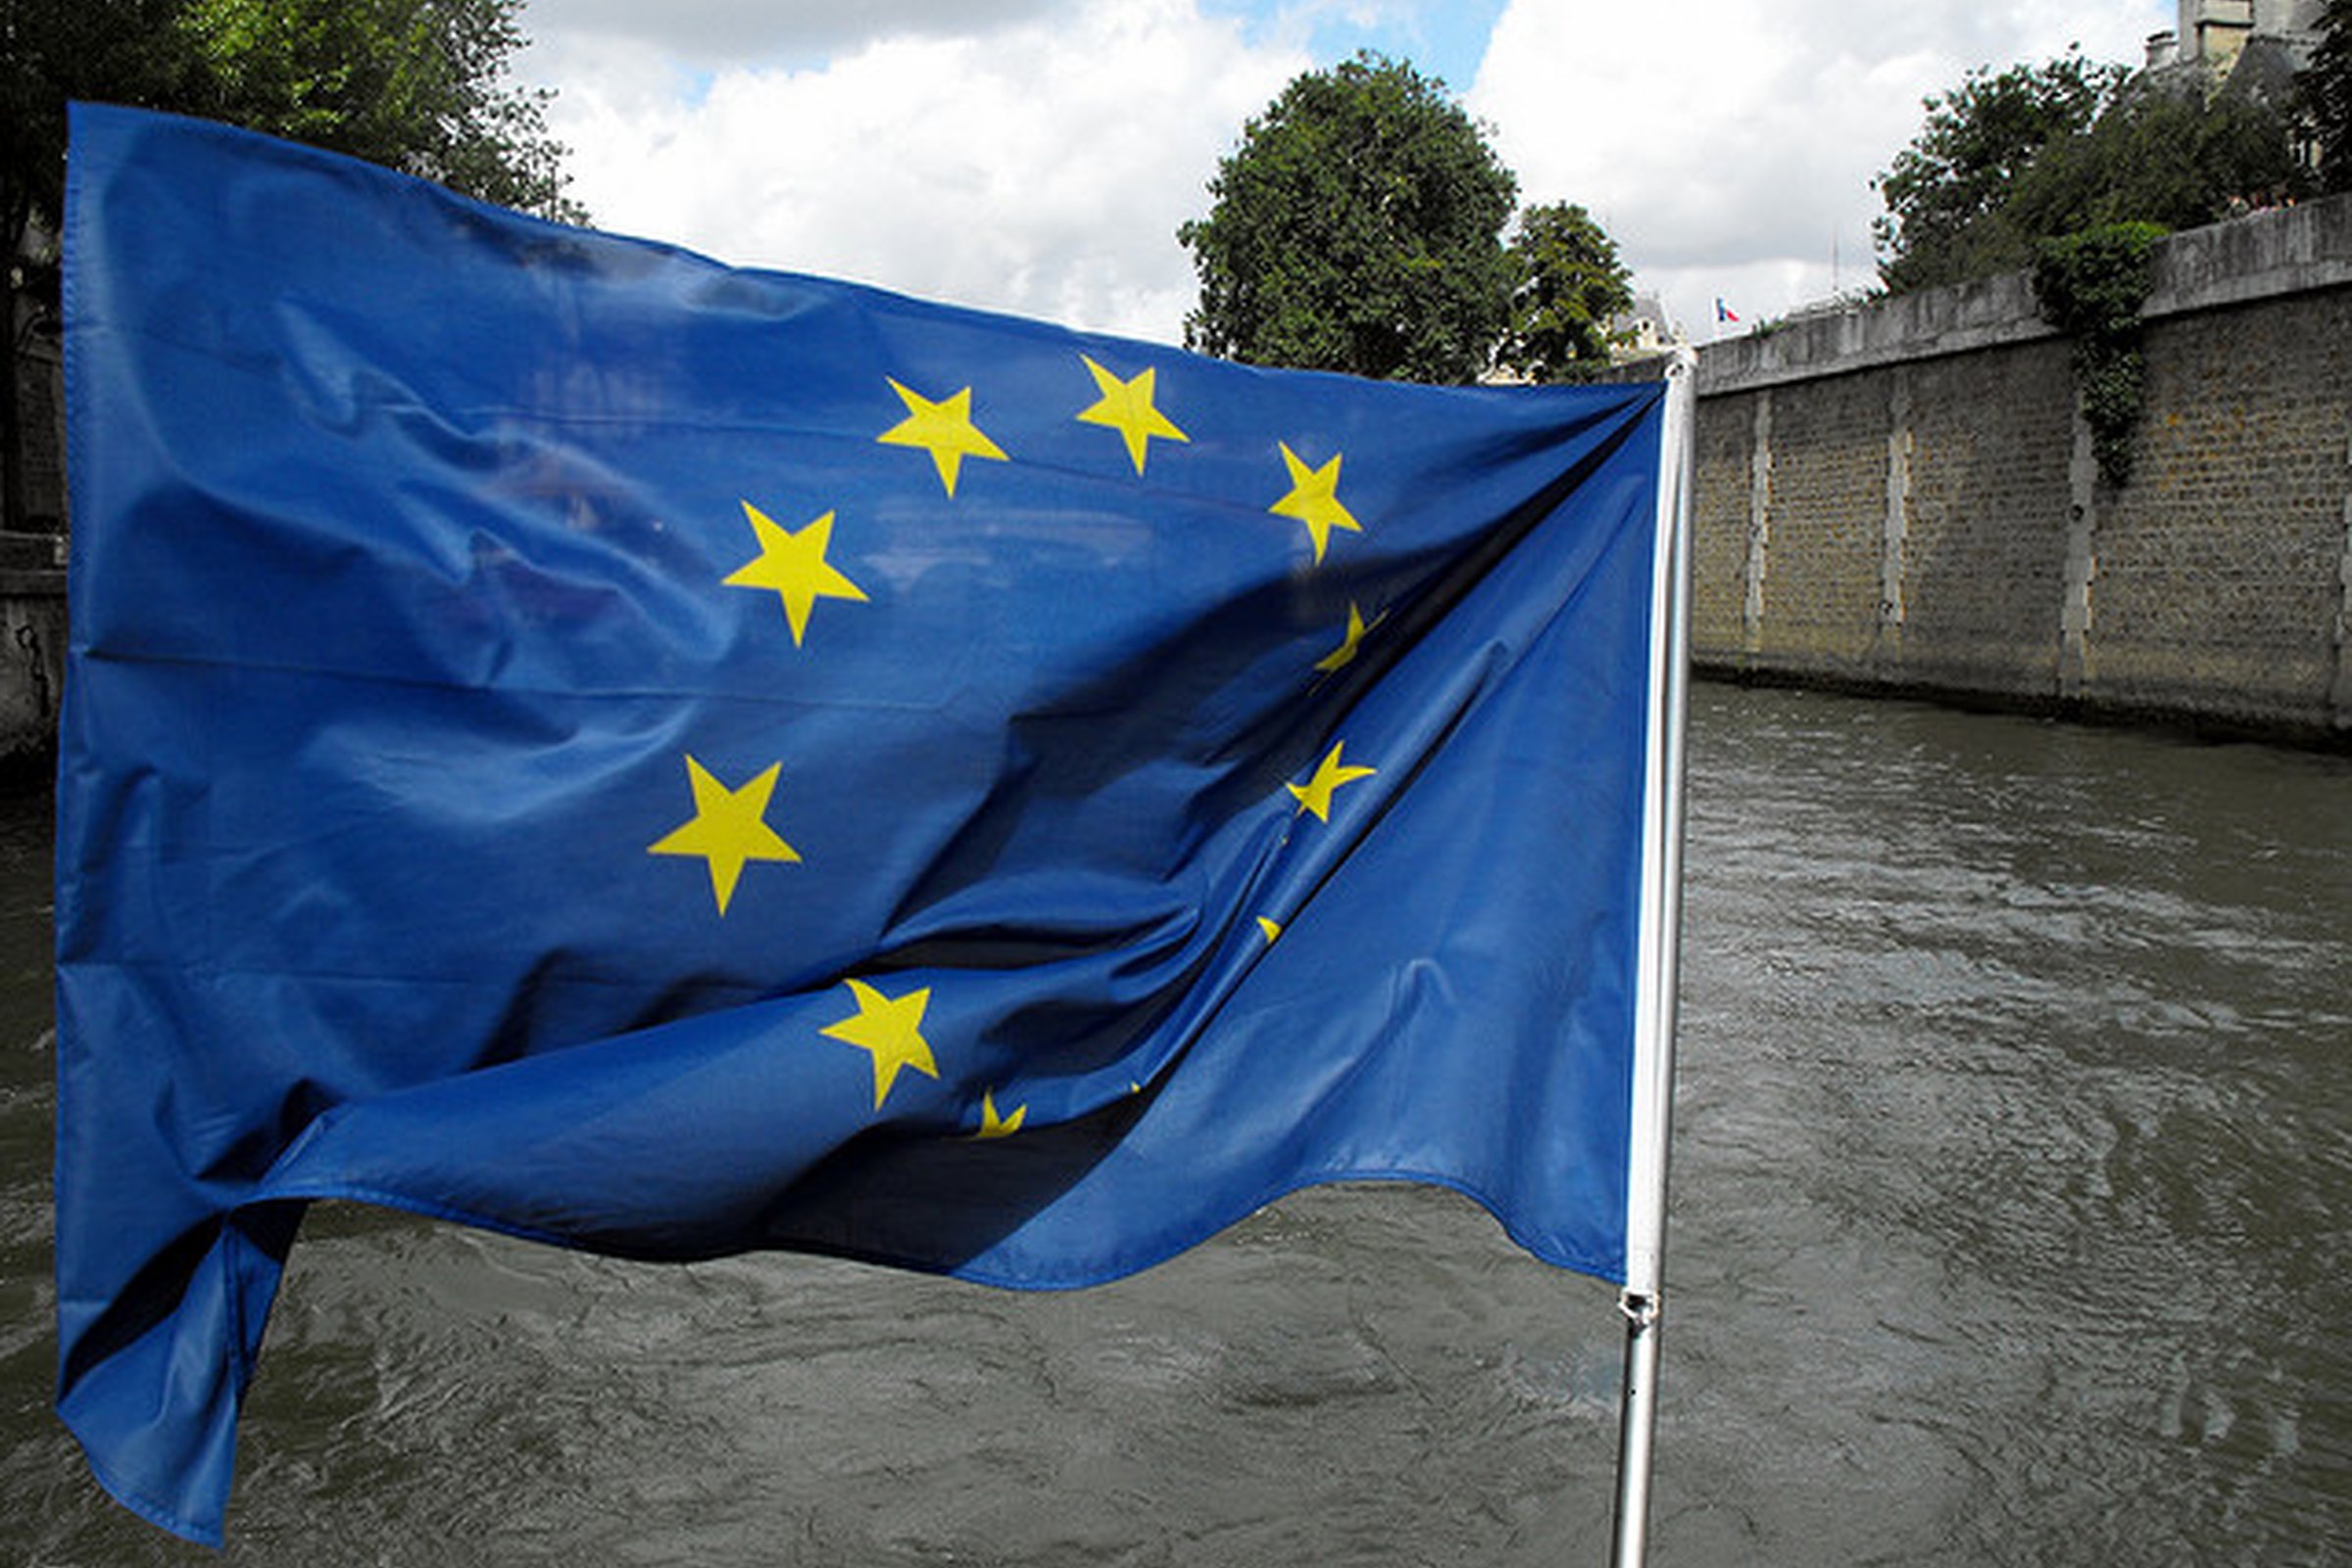 Reimagining Europe: Christian perspectives on the EU referendum